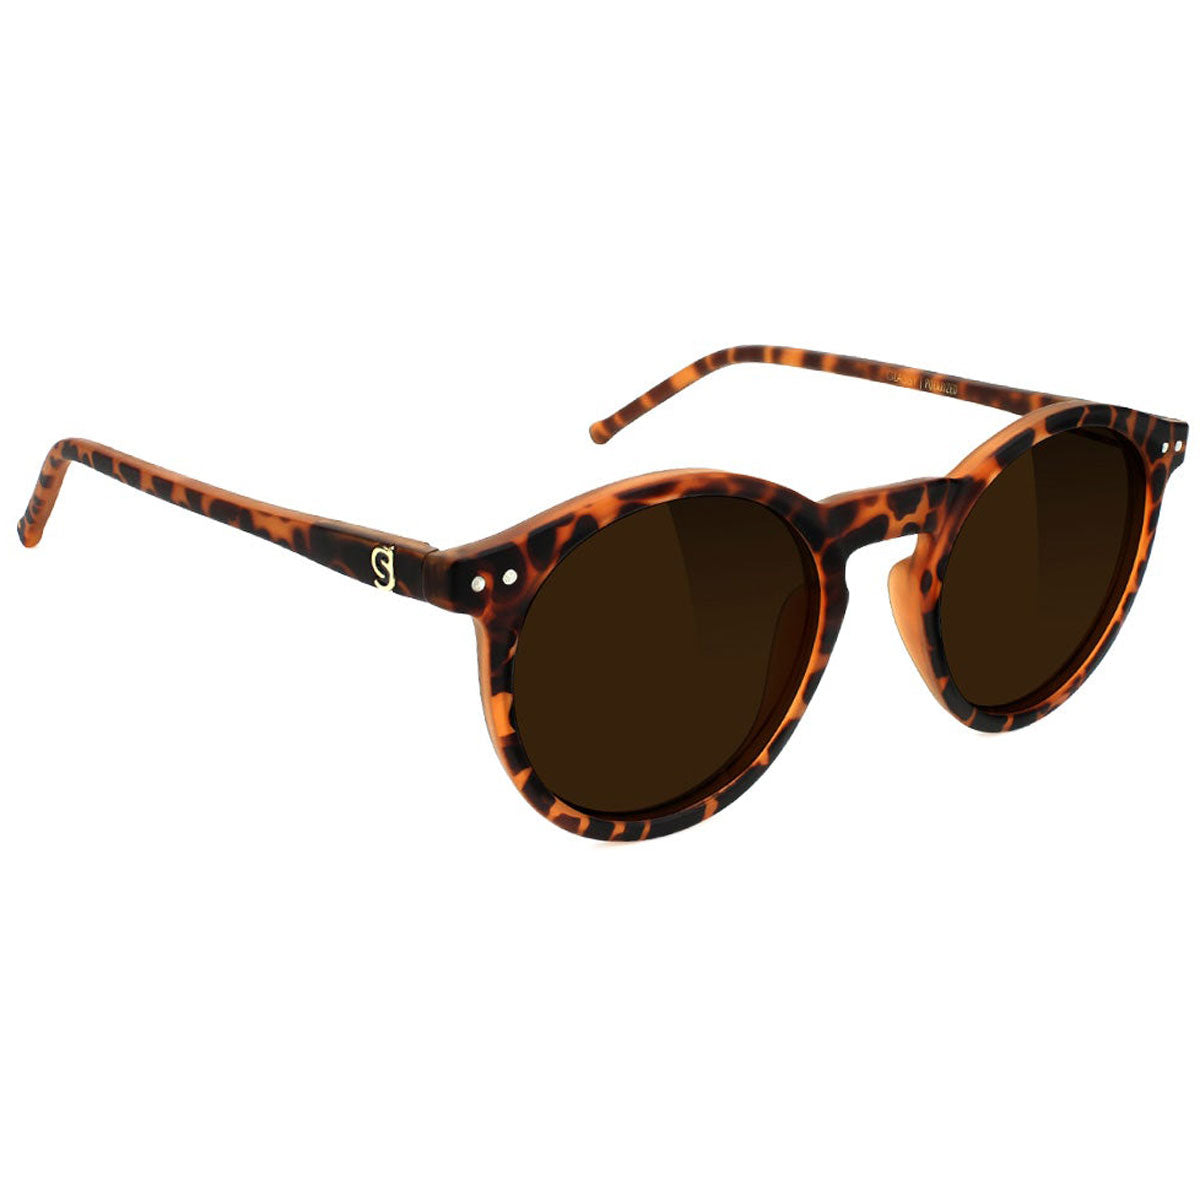 Glassy Apollo Premium Polarized Sunglasses - Matte Tortoise image 1